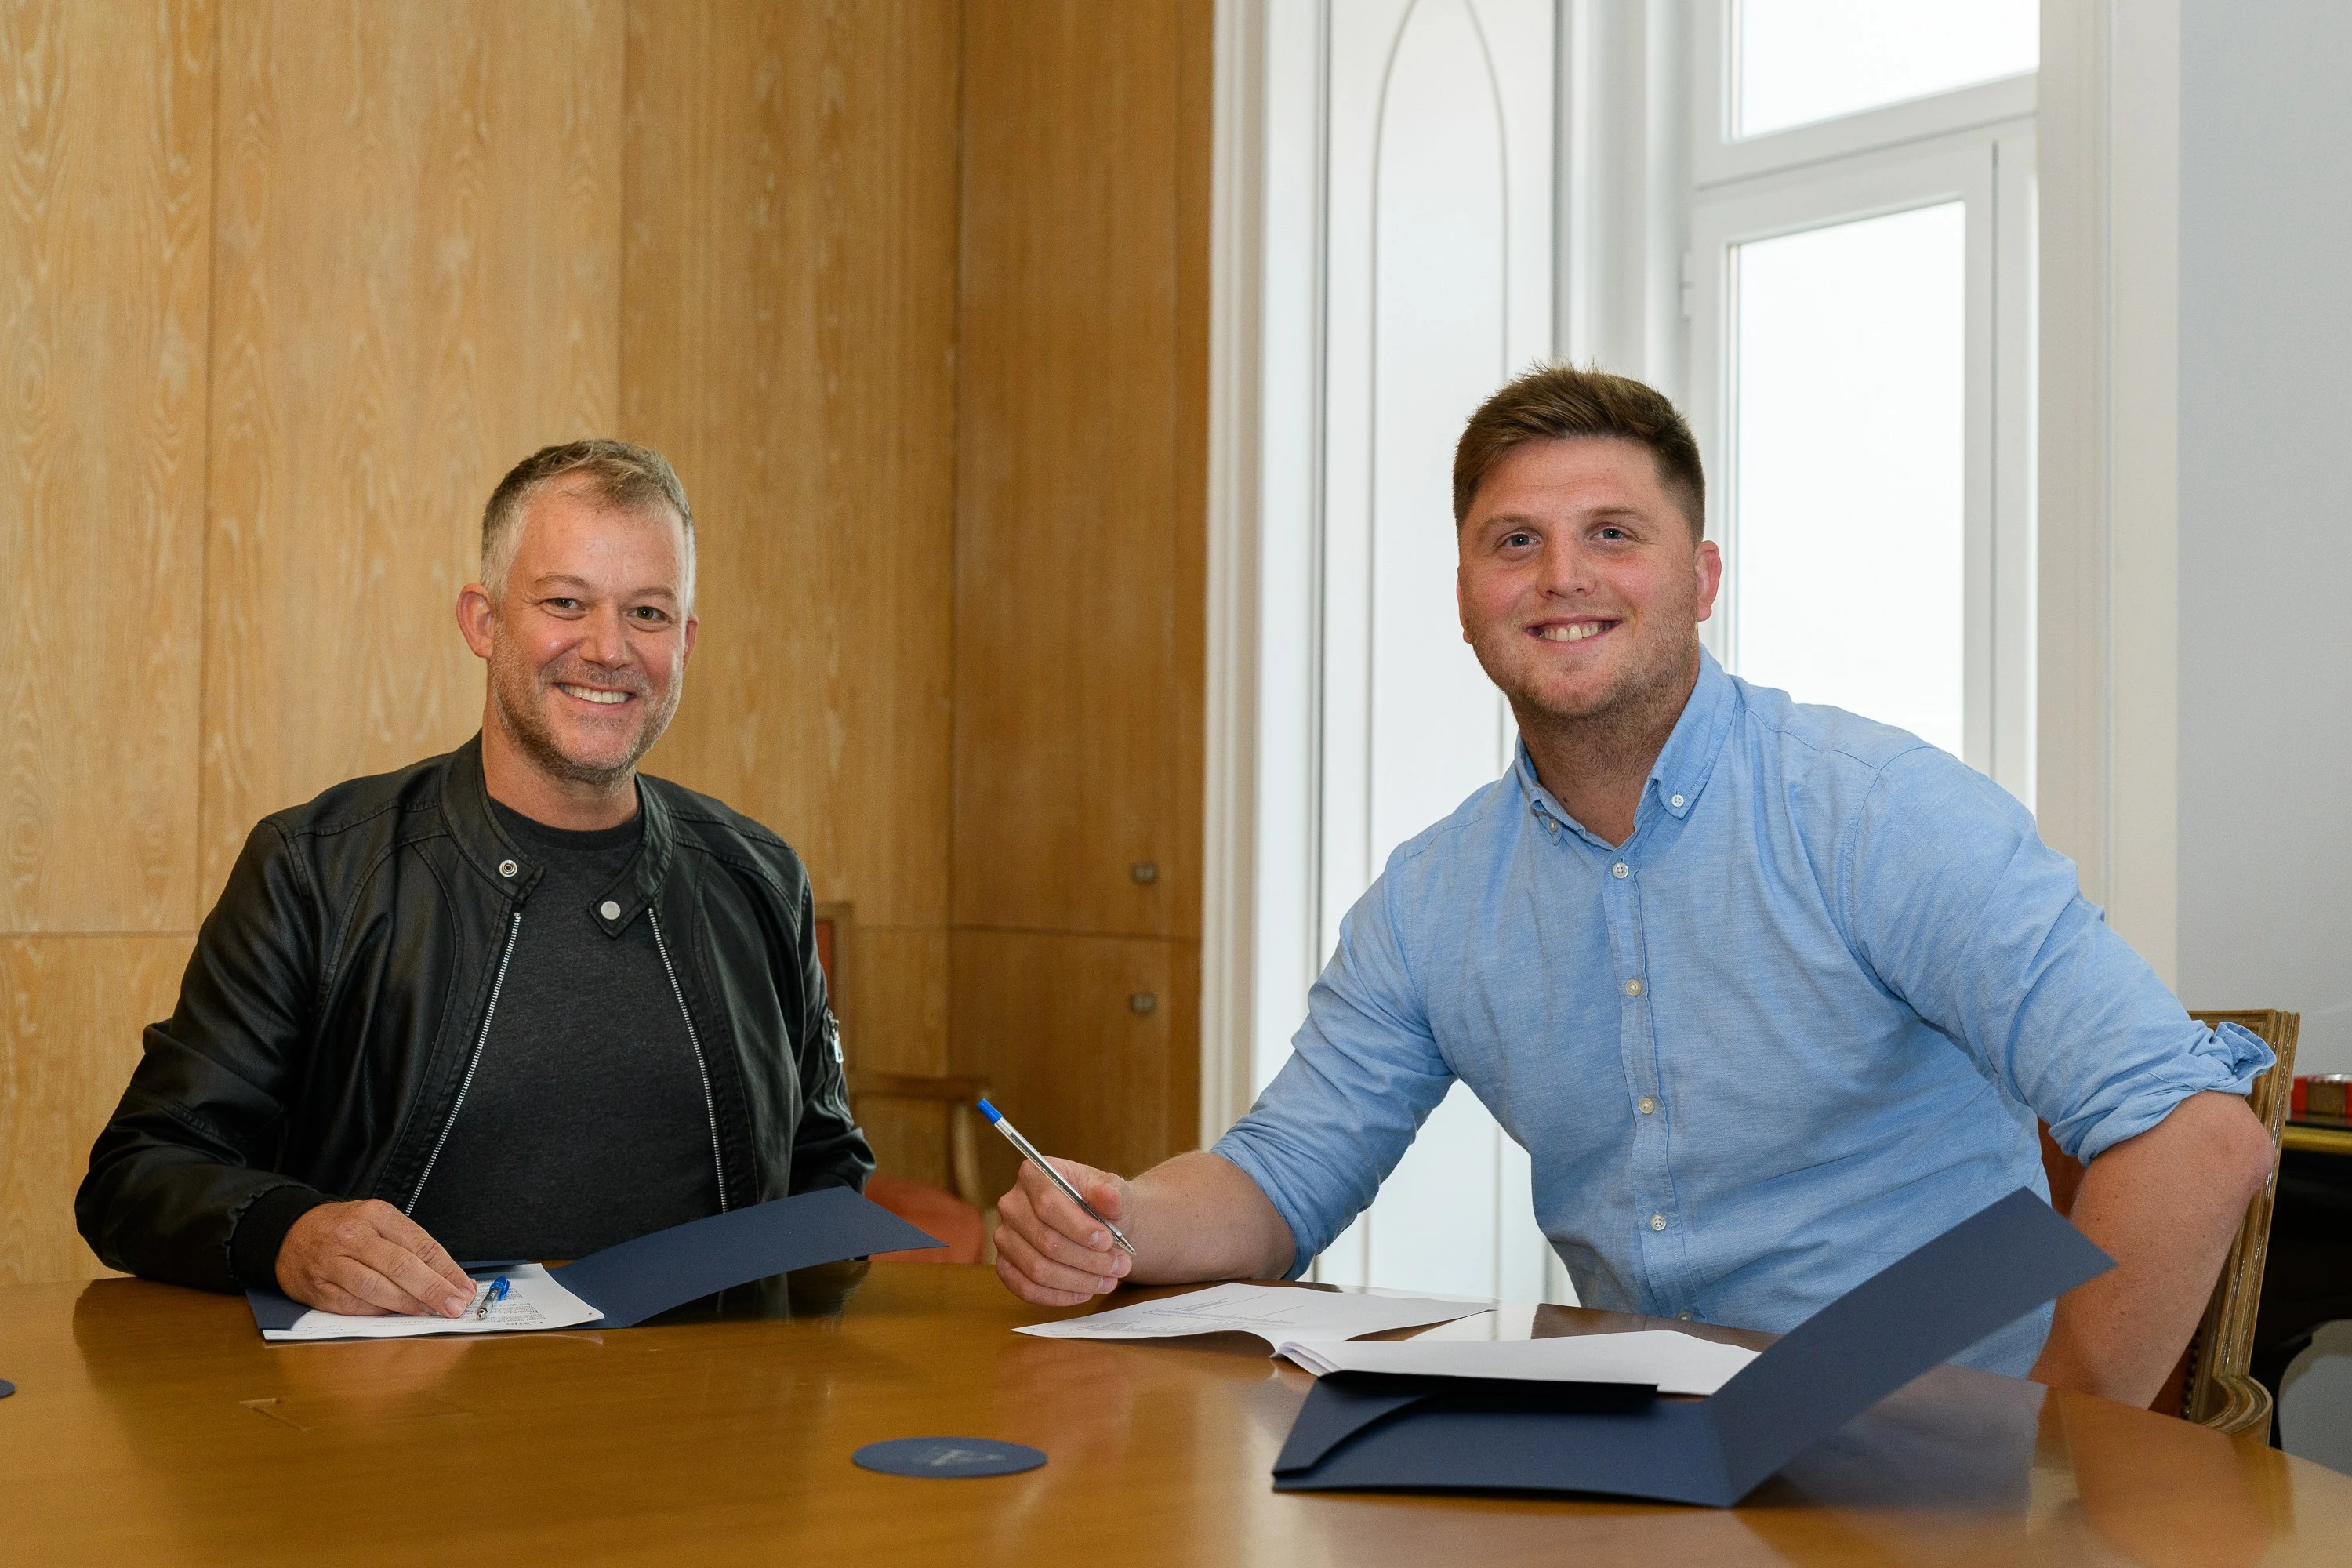 Dave Williams NomadX Founder (left) and Radim Rezek (right) signing the merger